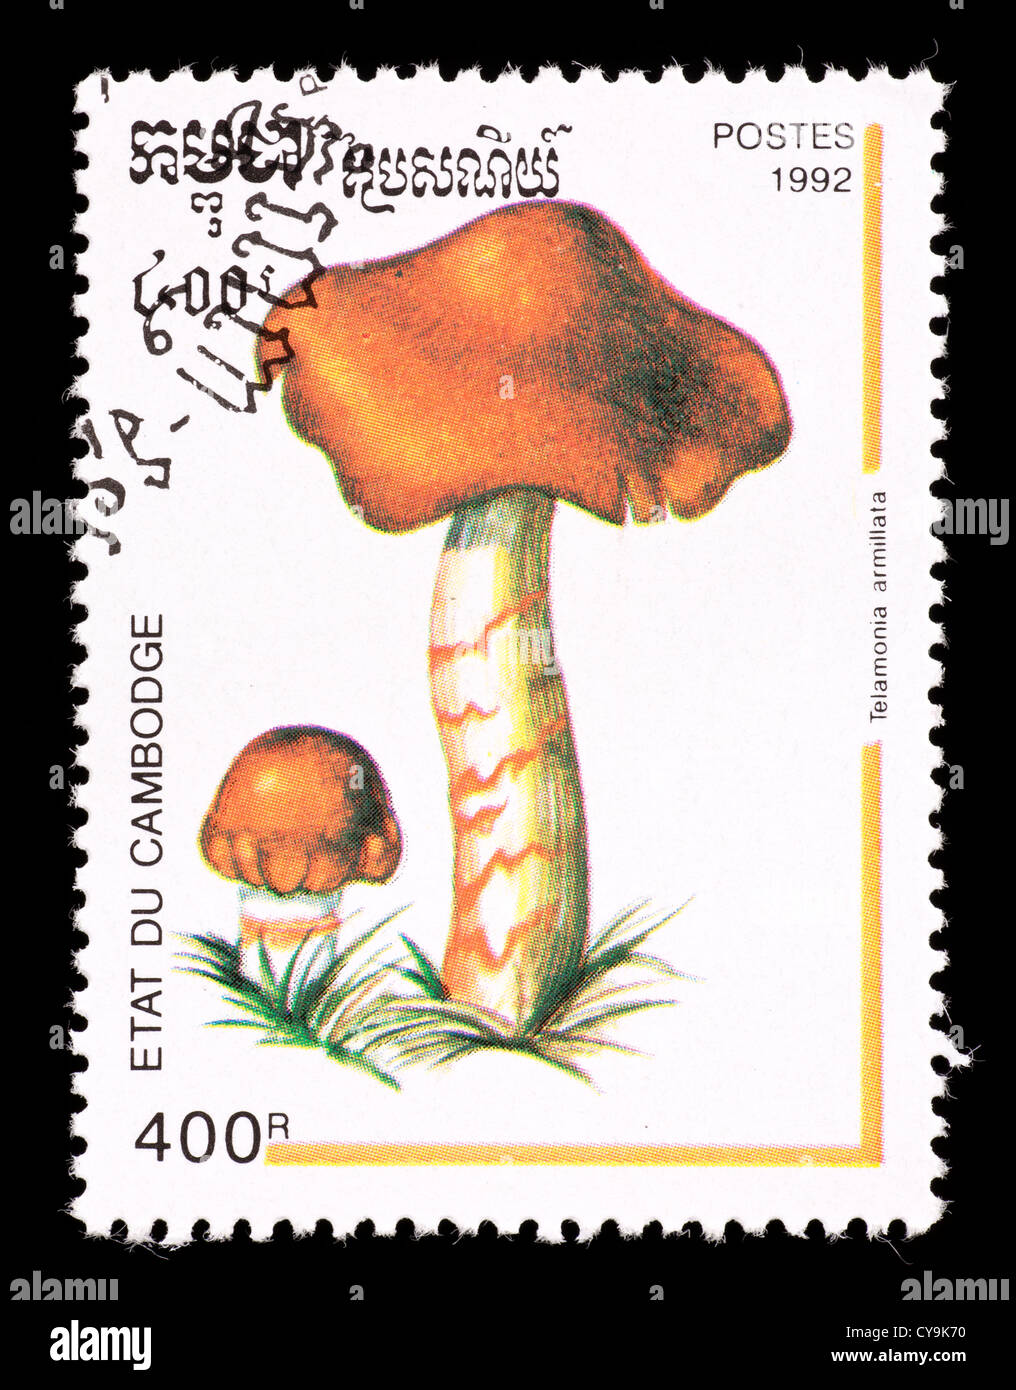 Postage stamp from Cambodia depicting mushrooms (Telamonia armillata) Stock Photo